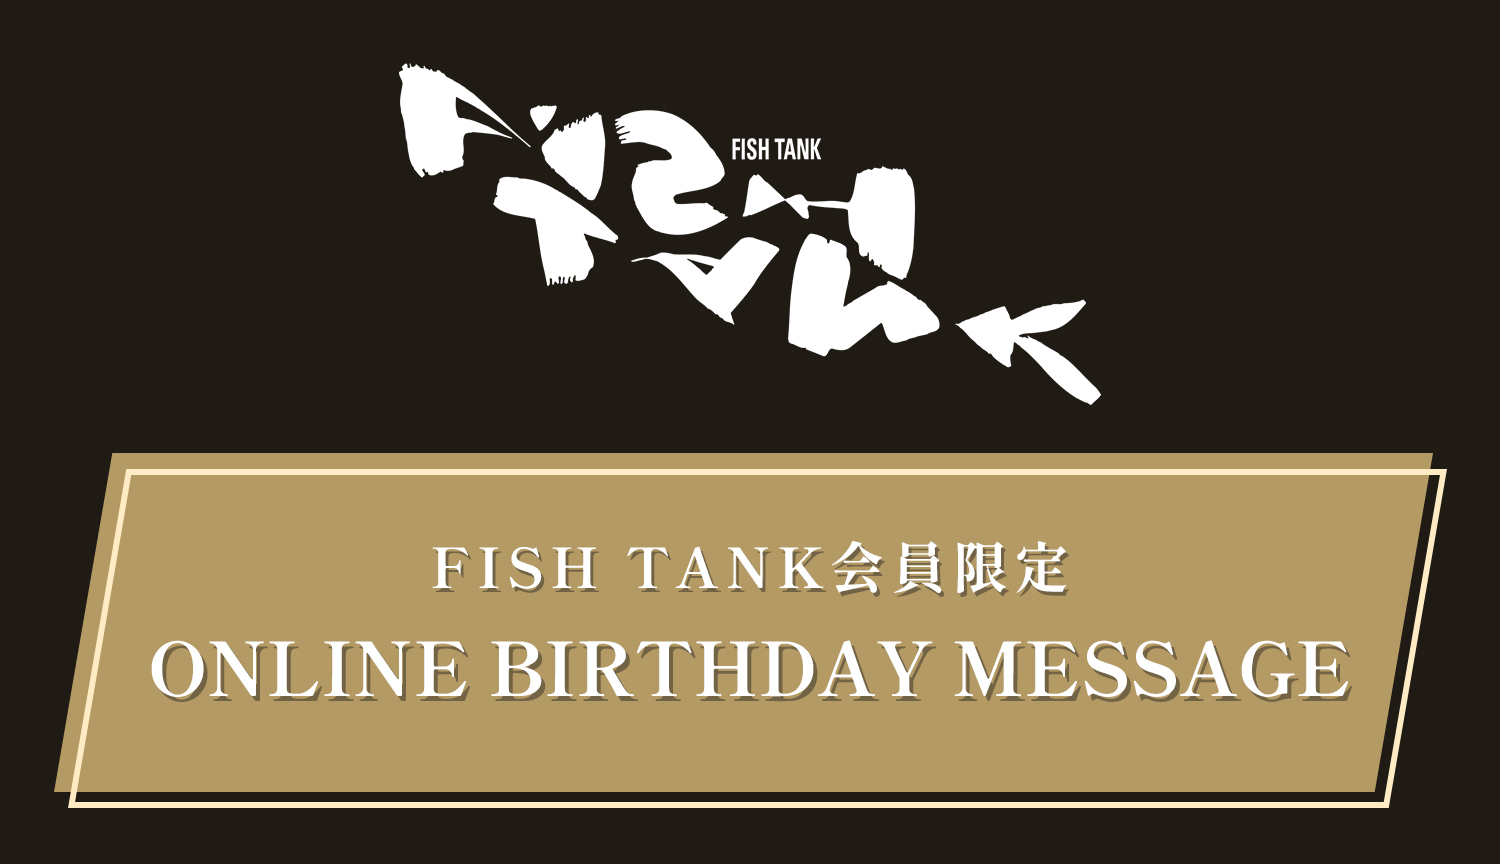 FISH TANK会員限定「IMAI HISASHI ONLINE BIRTHDAY MESSAGE」募集のお知らせ